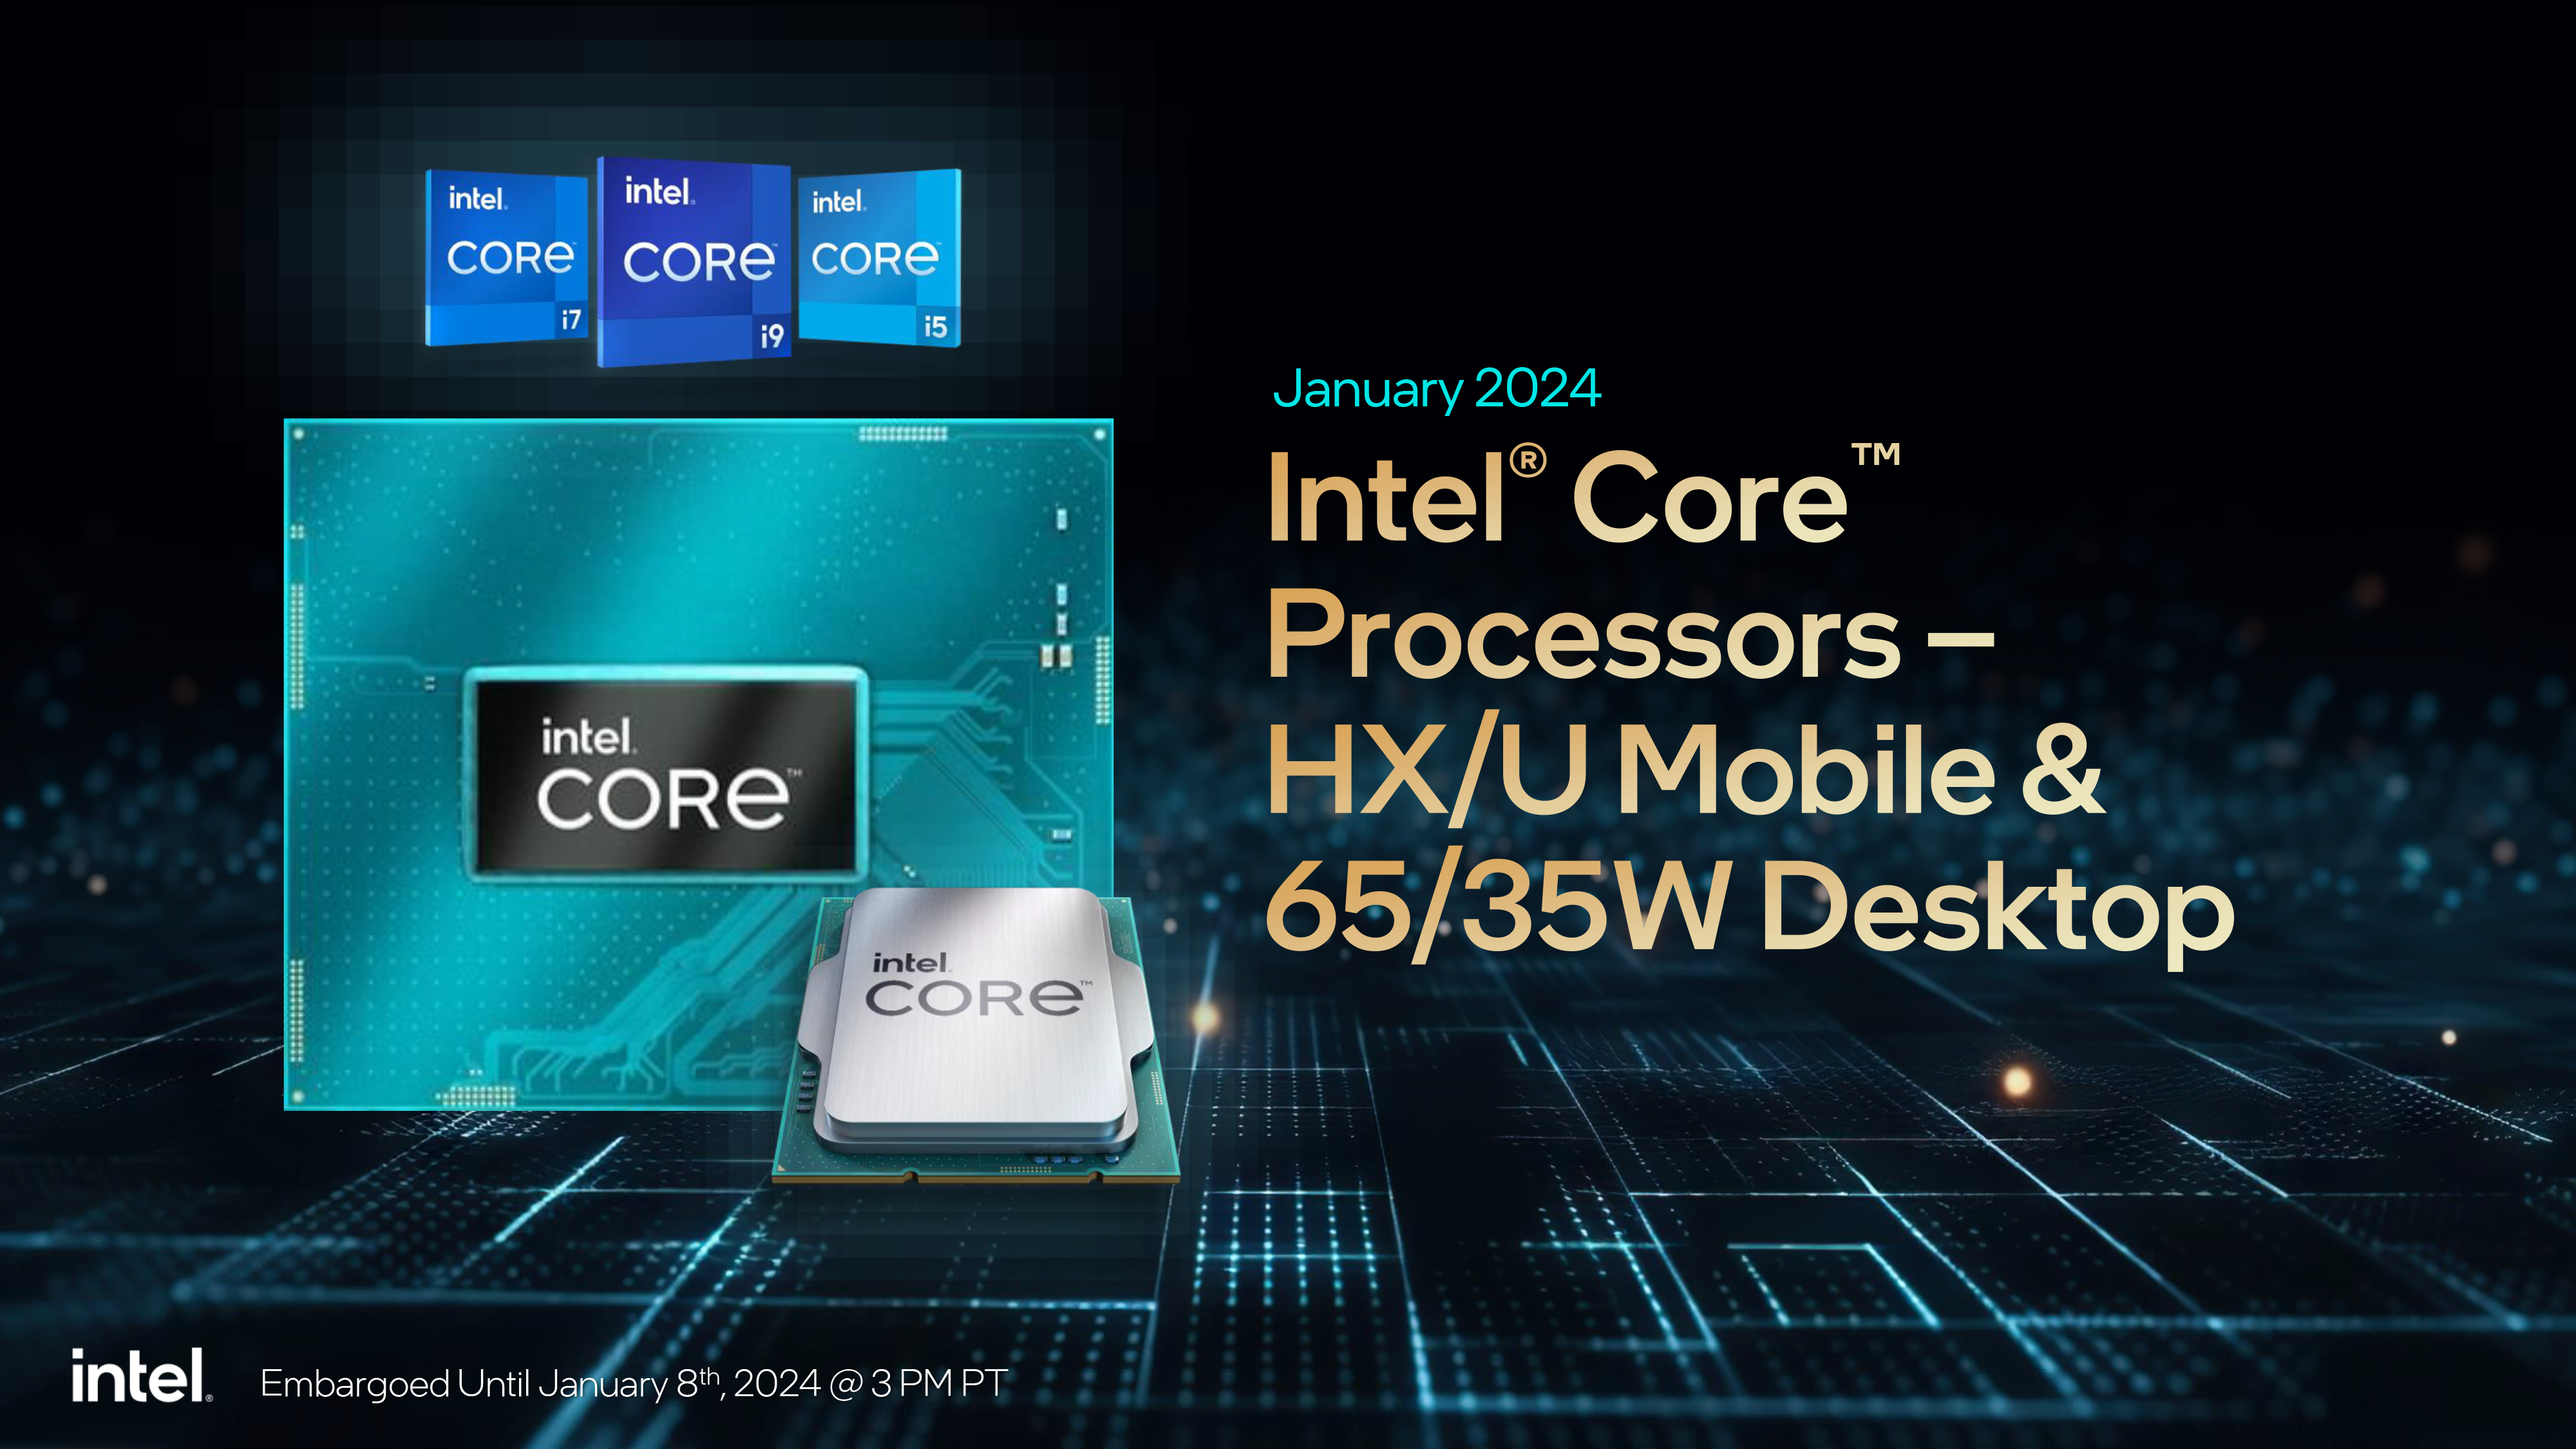 Intel Core HX/U 65W/35W desktop feature image for CES 2024